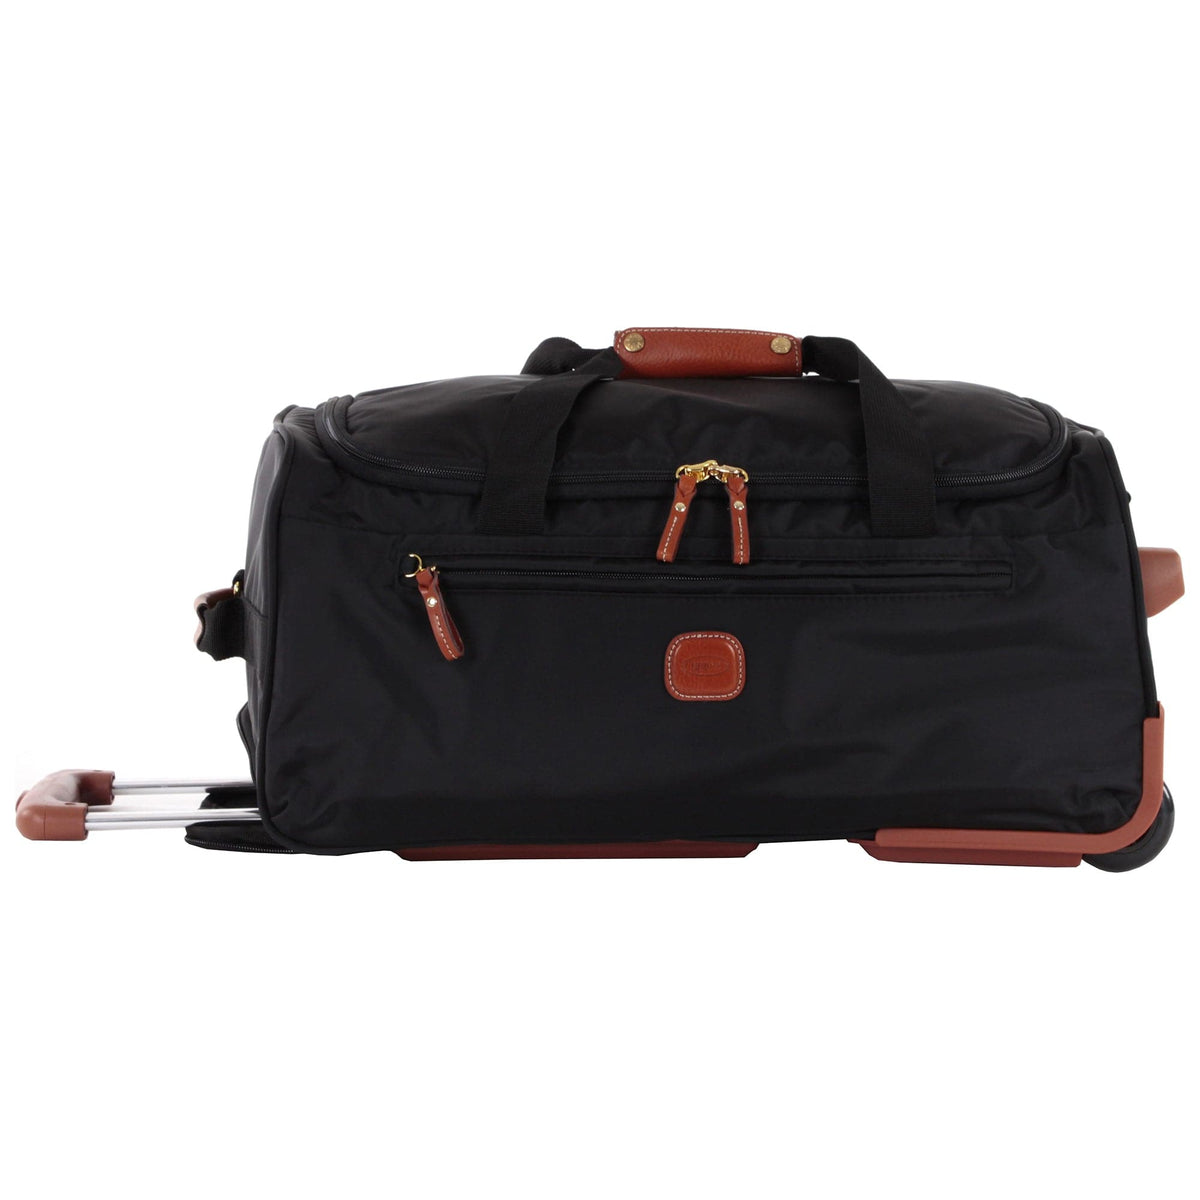 Bric's X-Bag/X-Travel 21" Rolling Duffle Bag